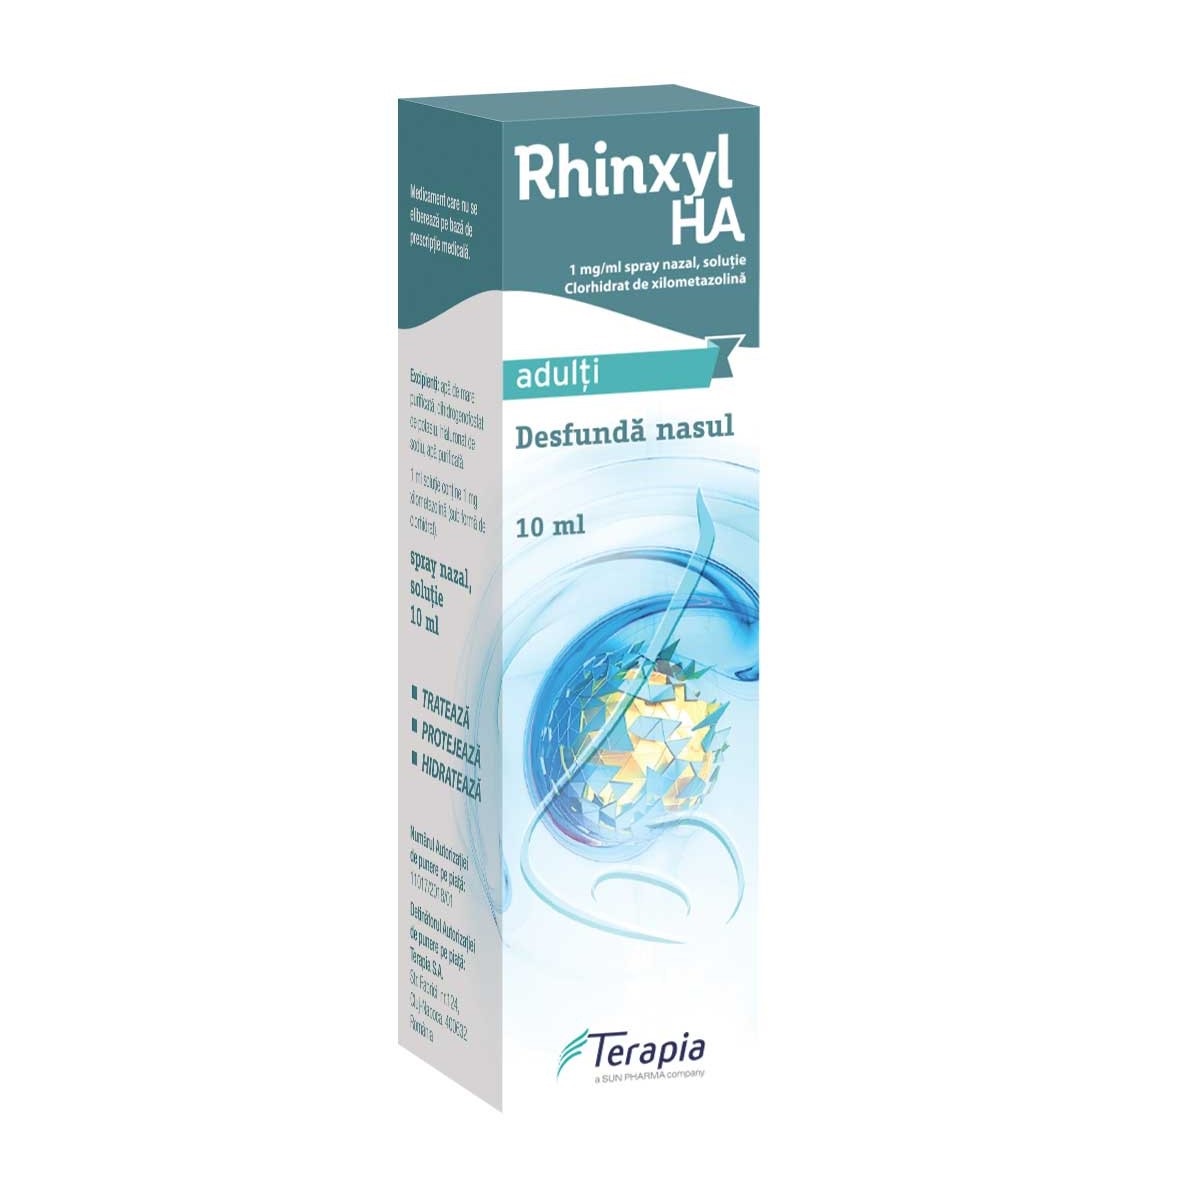 OTC - medicamente fara reteta - Rhinxyl HA 1mg/ml spray nazal adulti x 10ml, medik-on.ro